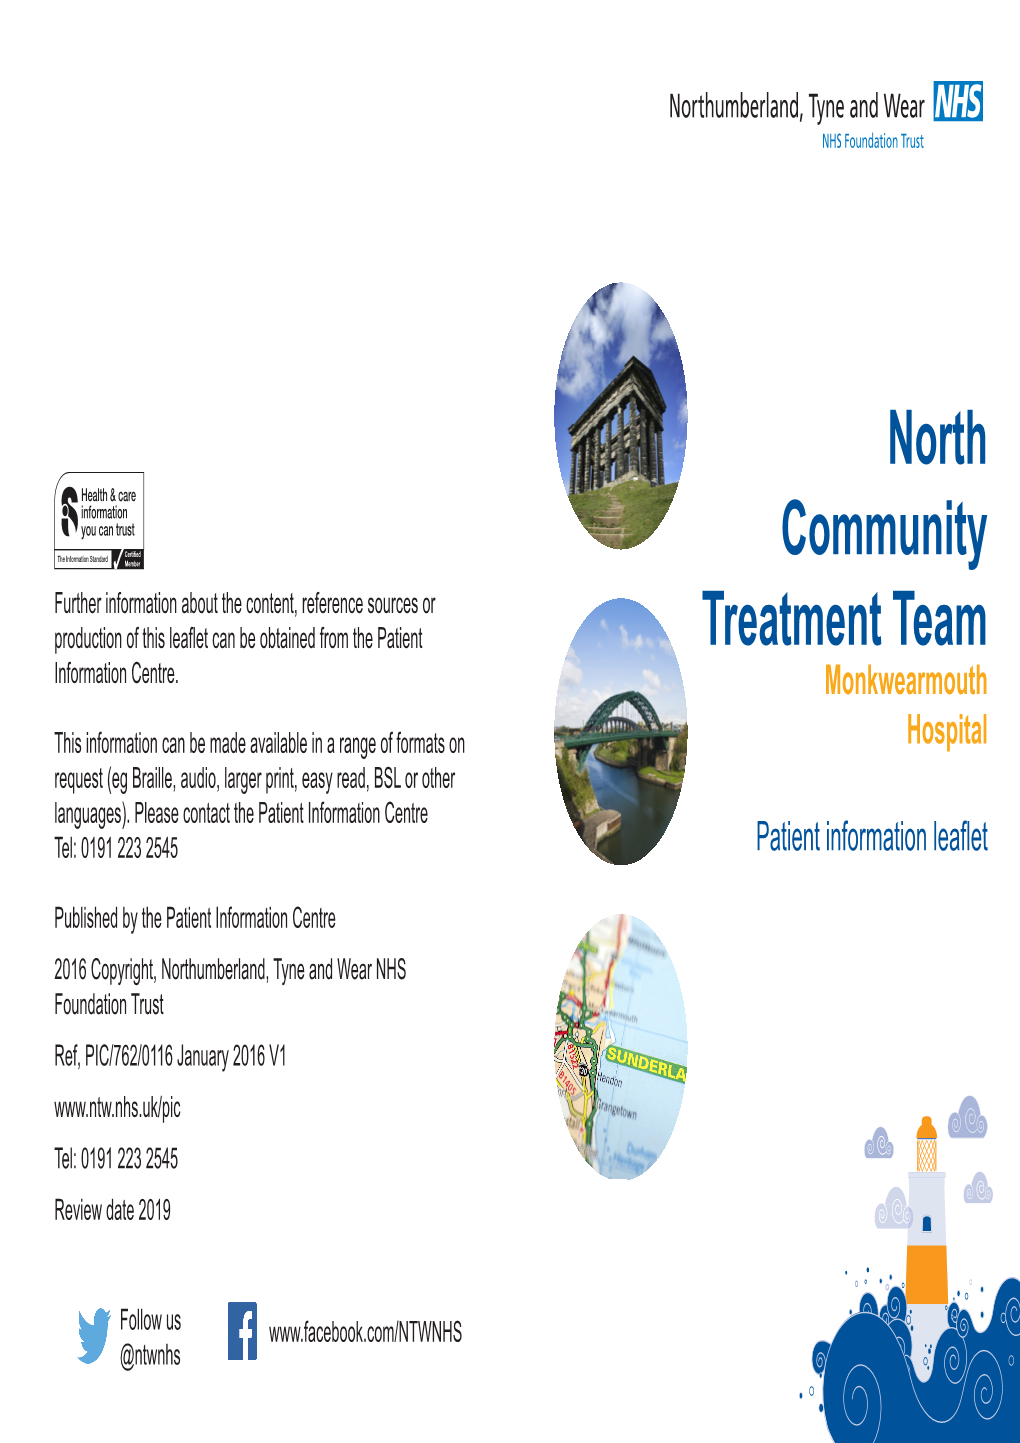 North Community Treatment Team Monkwearmouth Hospital, Newcastle Road, Introduction Sunderland, SR5 1NB